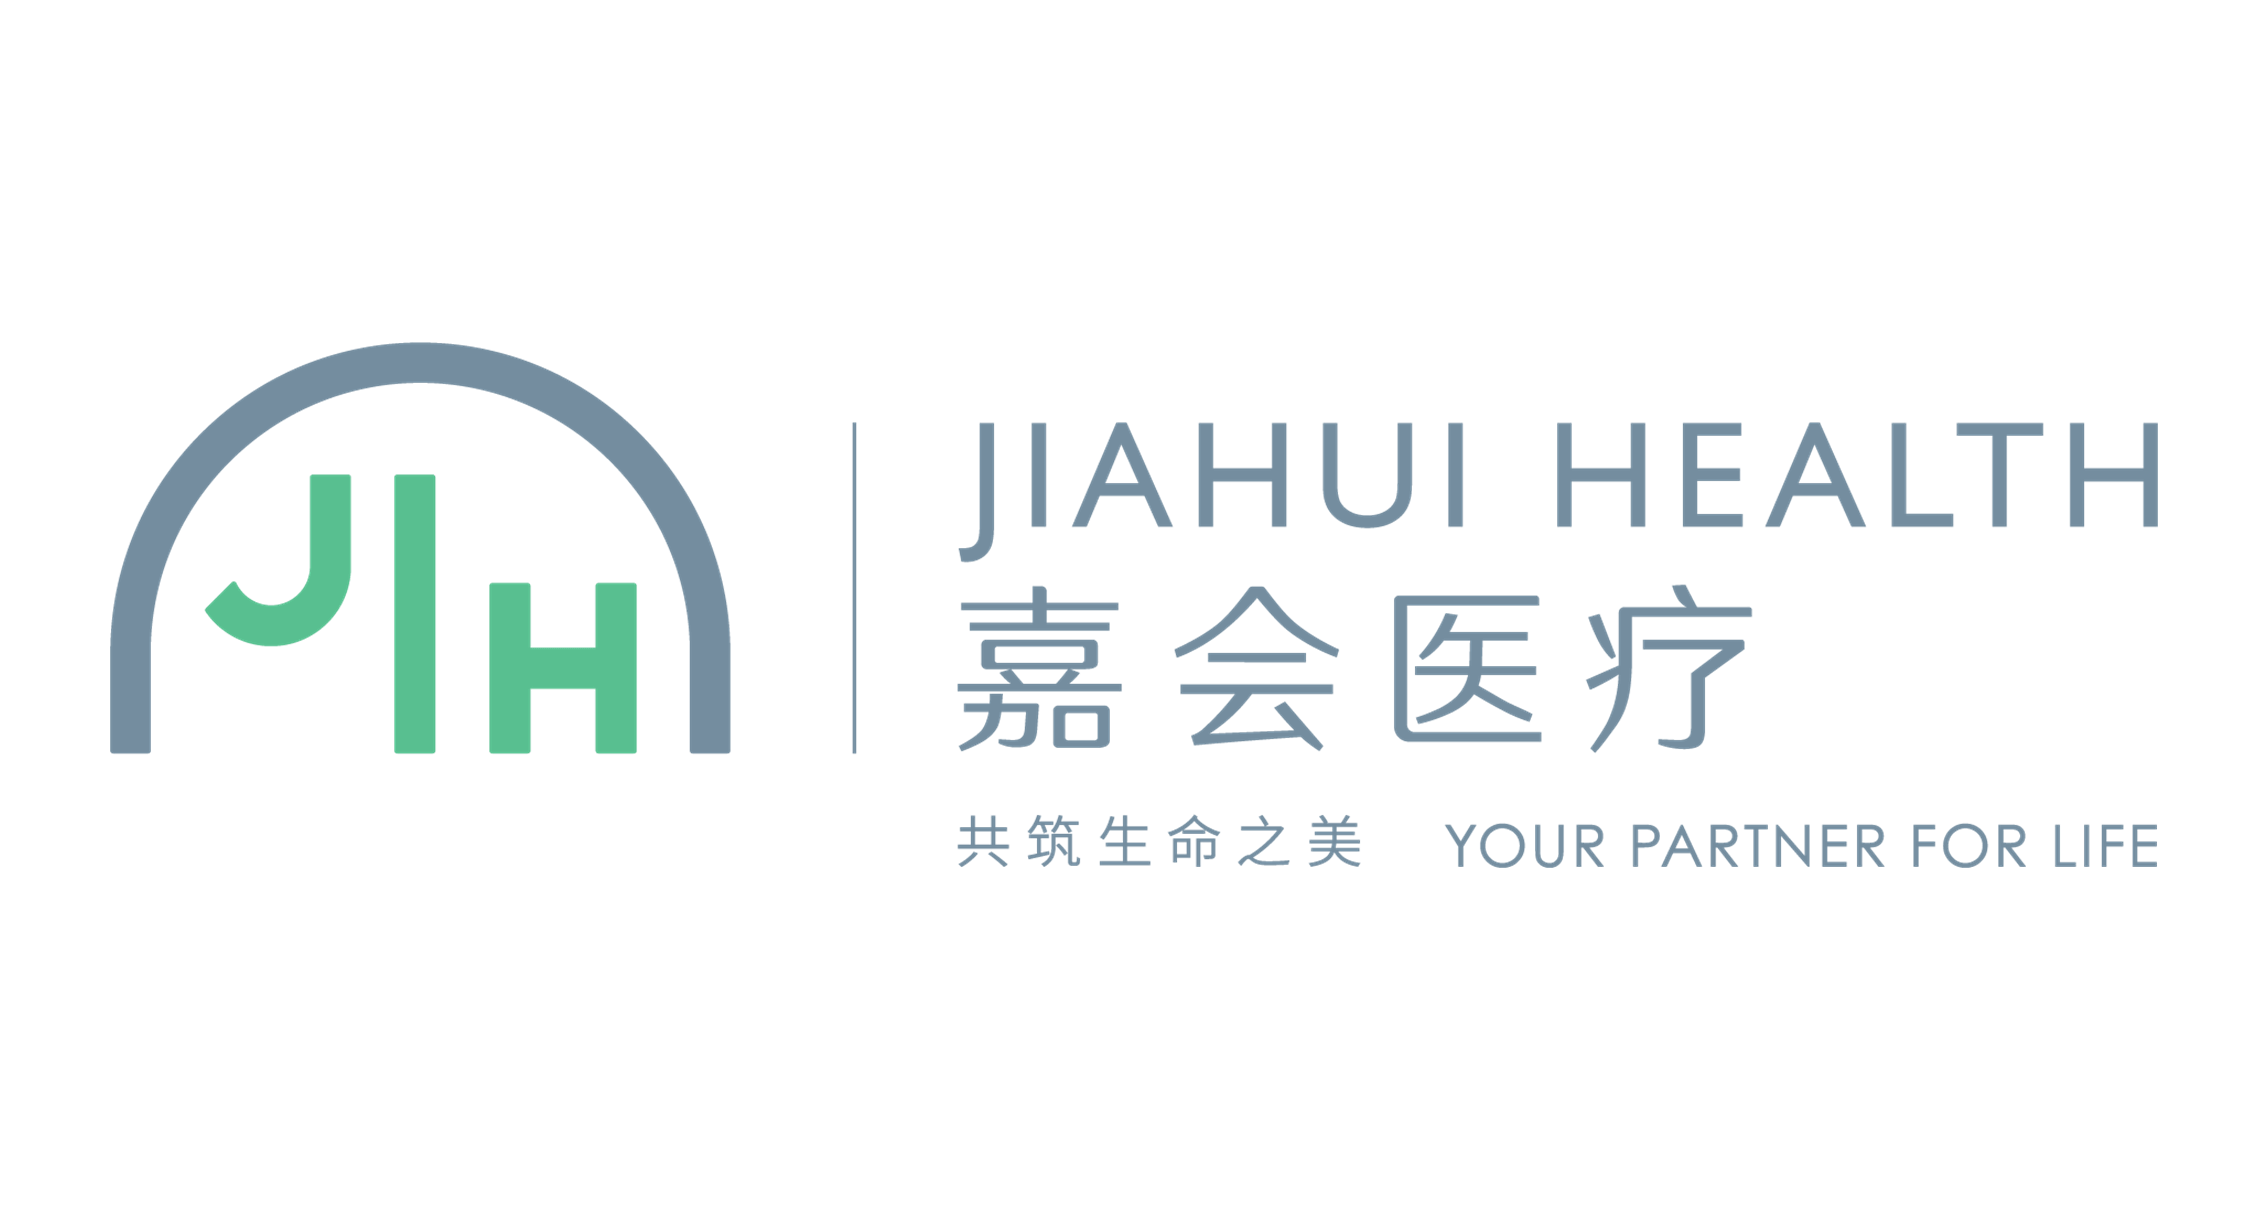 嘉会医疗 Jiahui Health